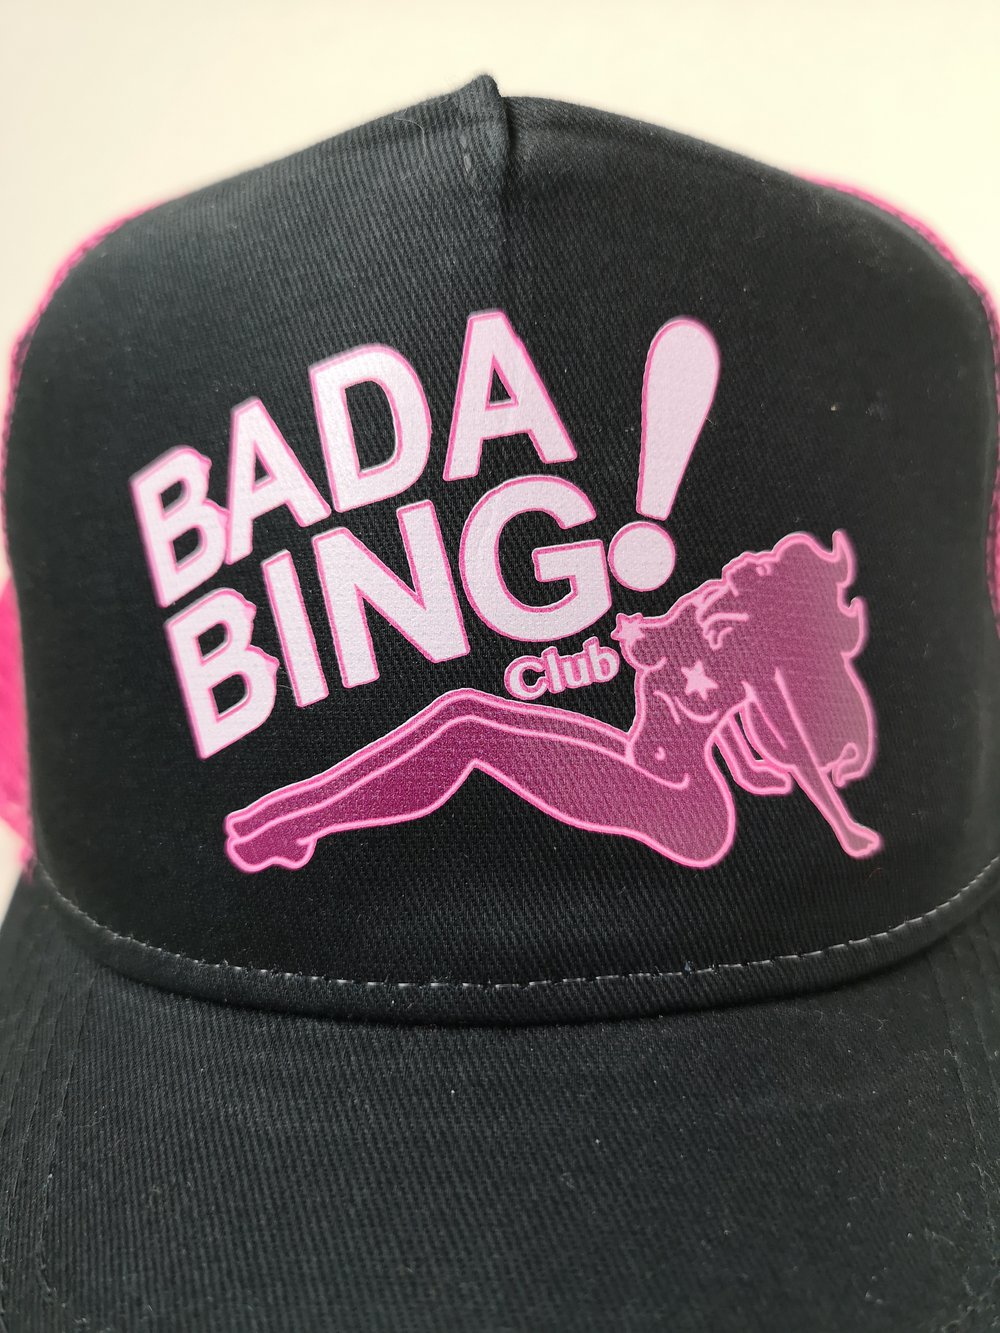 Bada Bing” trucker hats in Costa Rica!